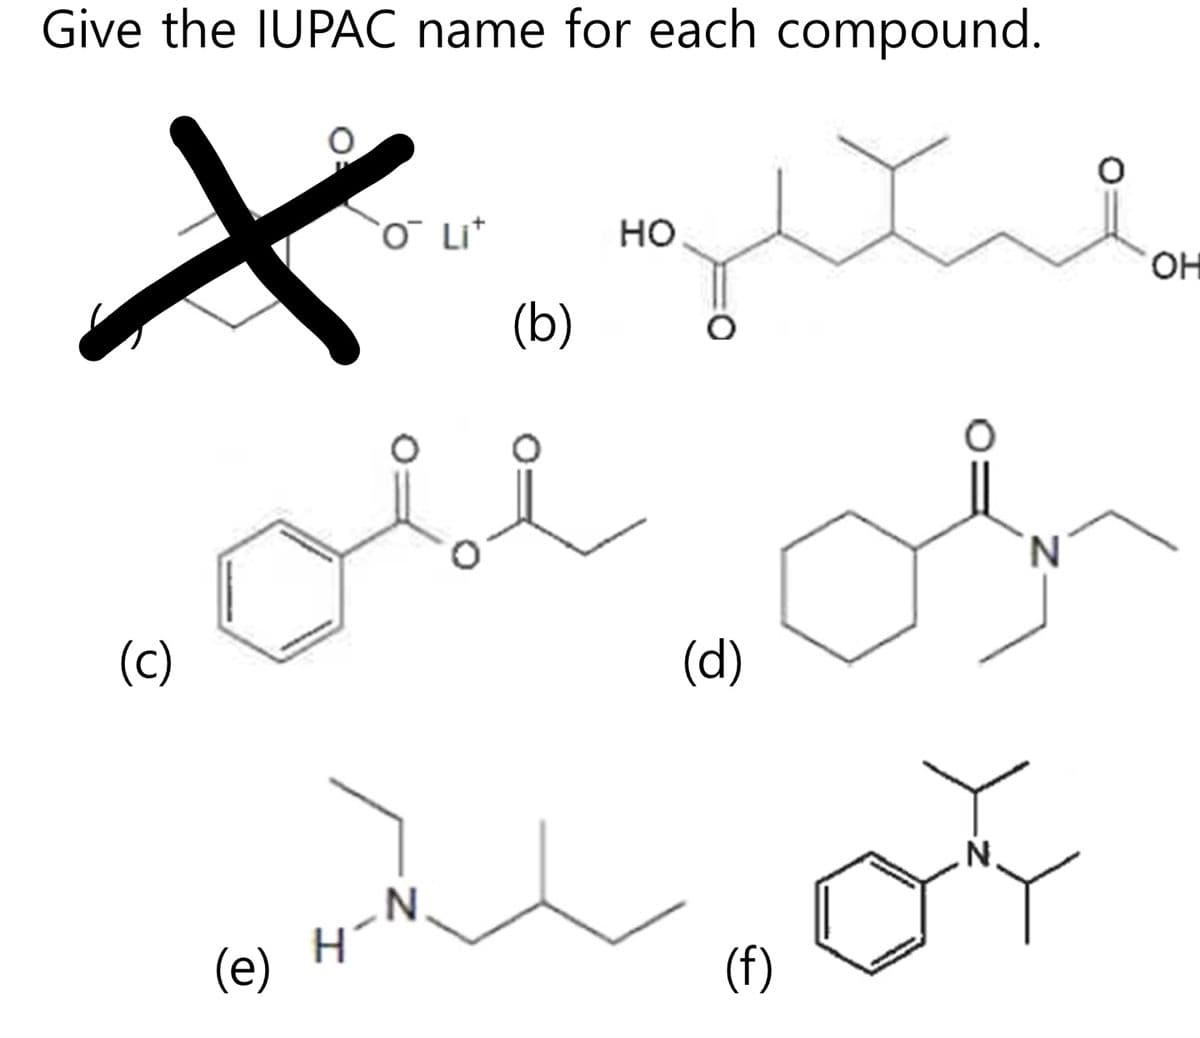 Give the IUPAC name for each compound.
X
(c)
H
(e)
O Lit
N
(b)
HO
مسلم
(d)
(f)
N
N
OH